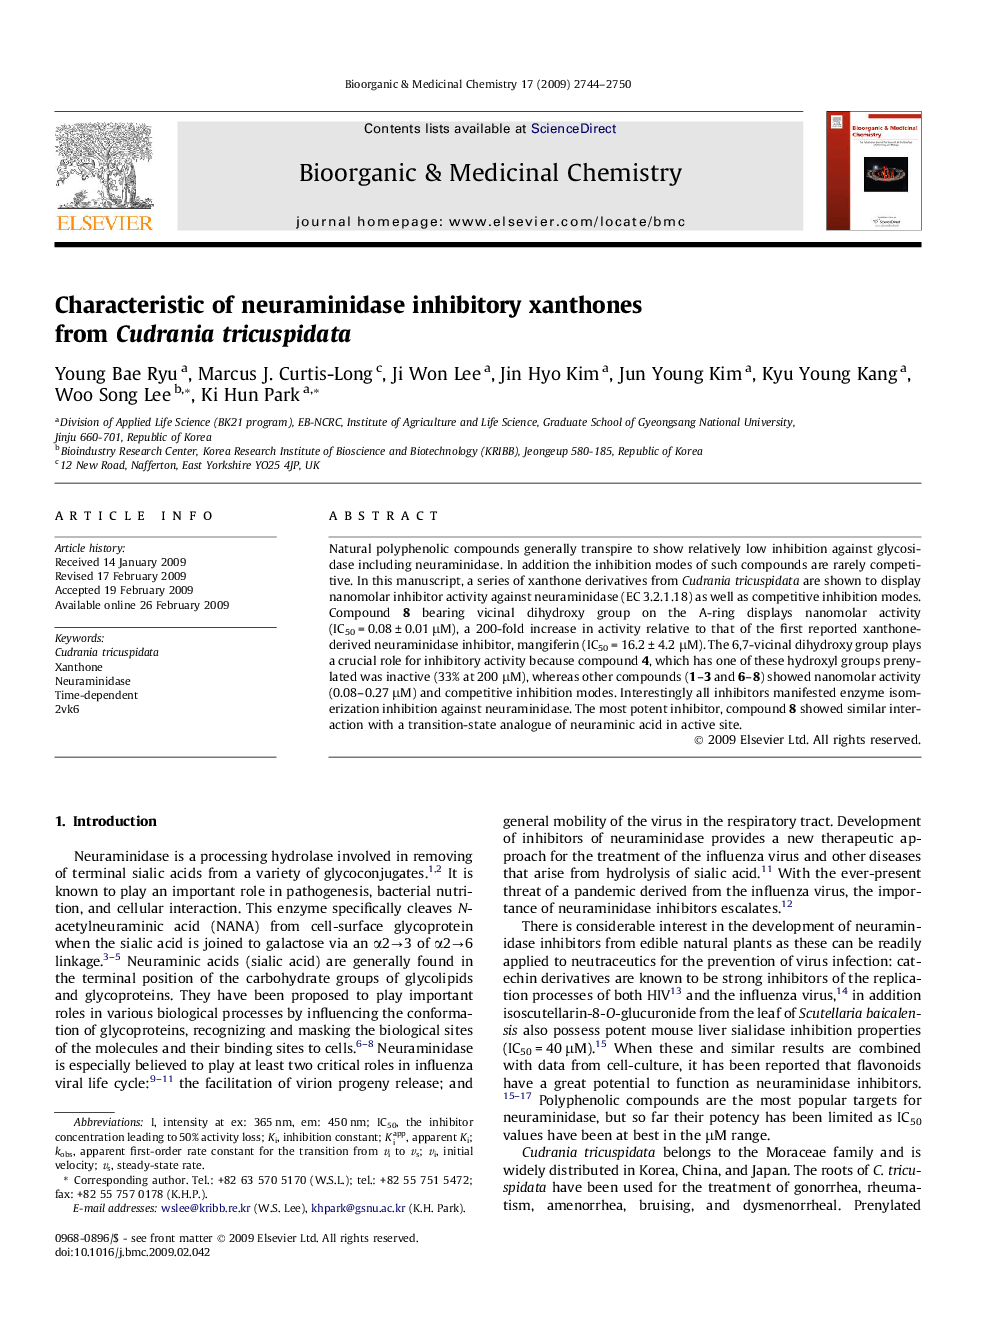 Characteristic of neuraminidase inhibitory xanthones from Cudrania tricuspidata